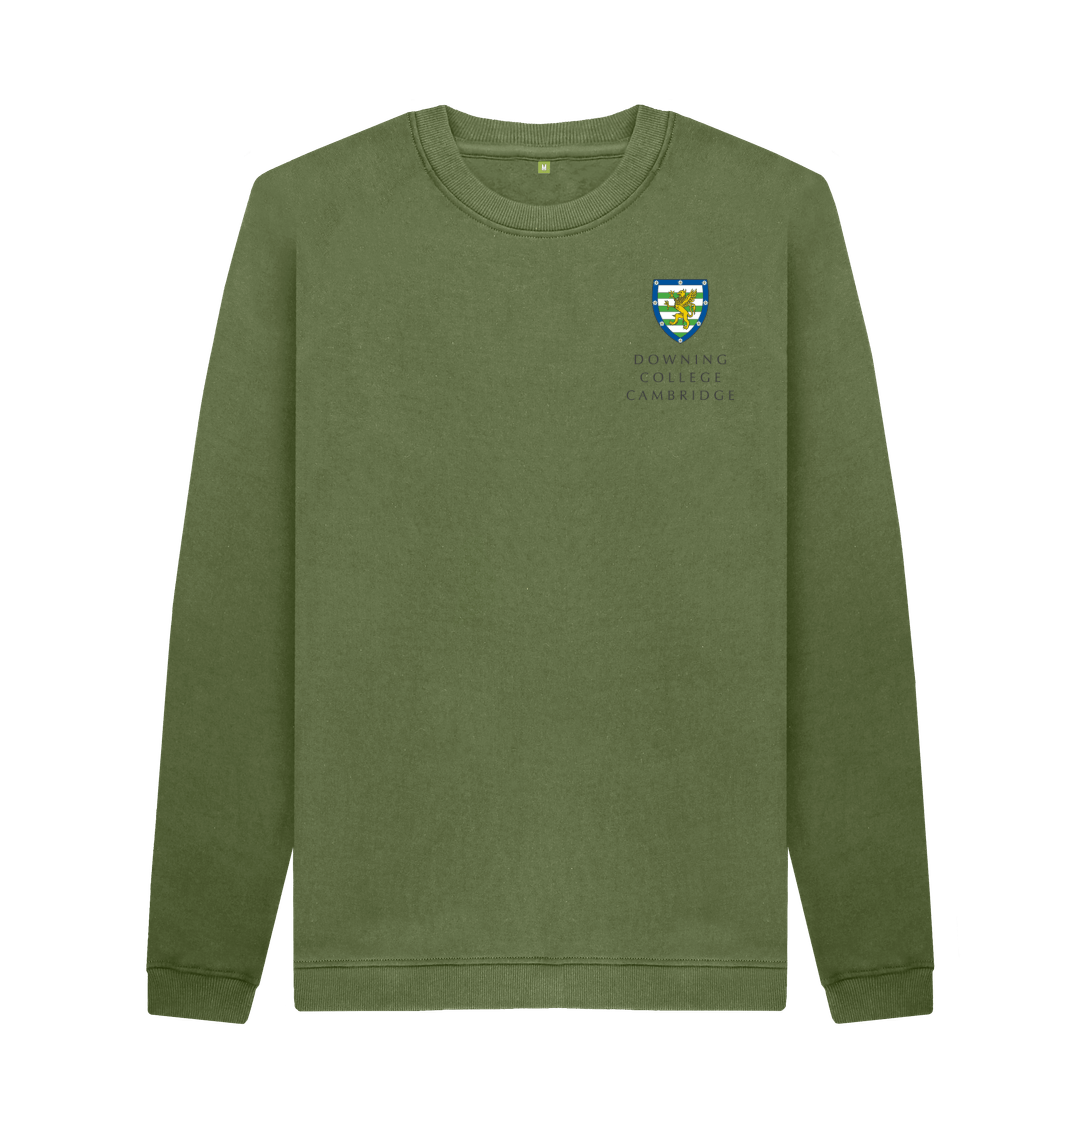 Downing College classic Sweatshirt